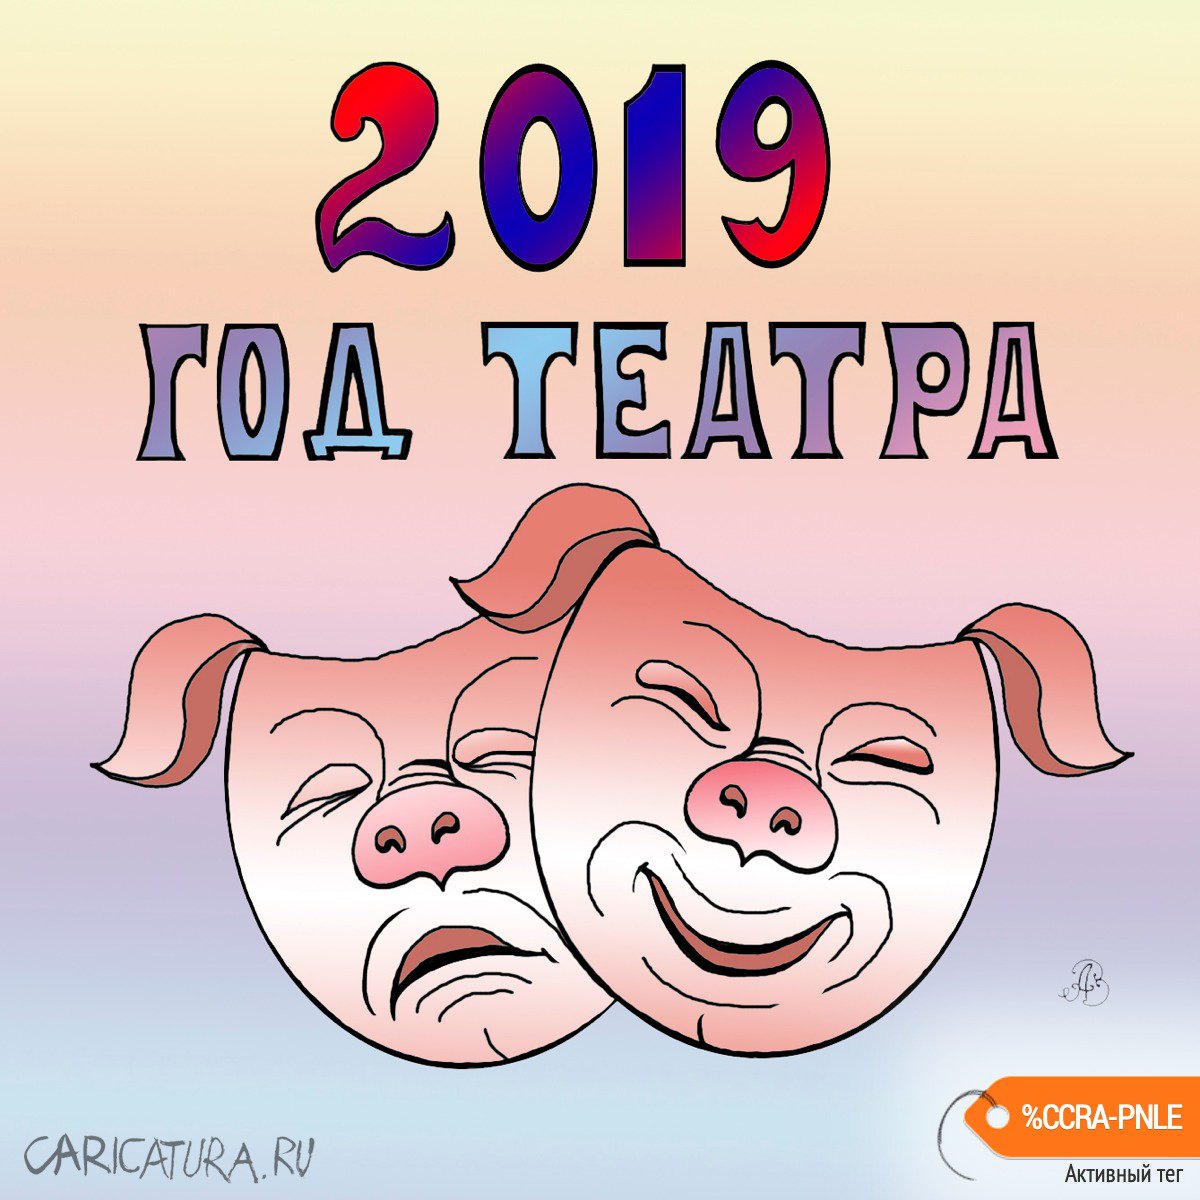 Карикатура "2019 - Год театра", Андрей Ребров